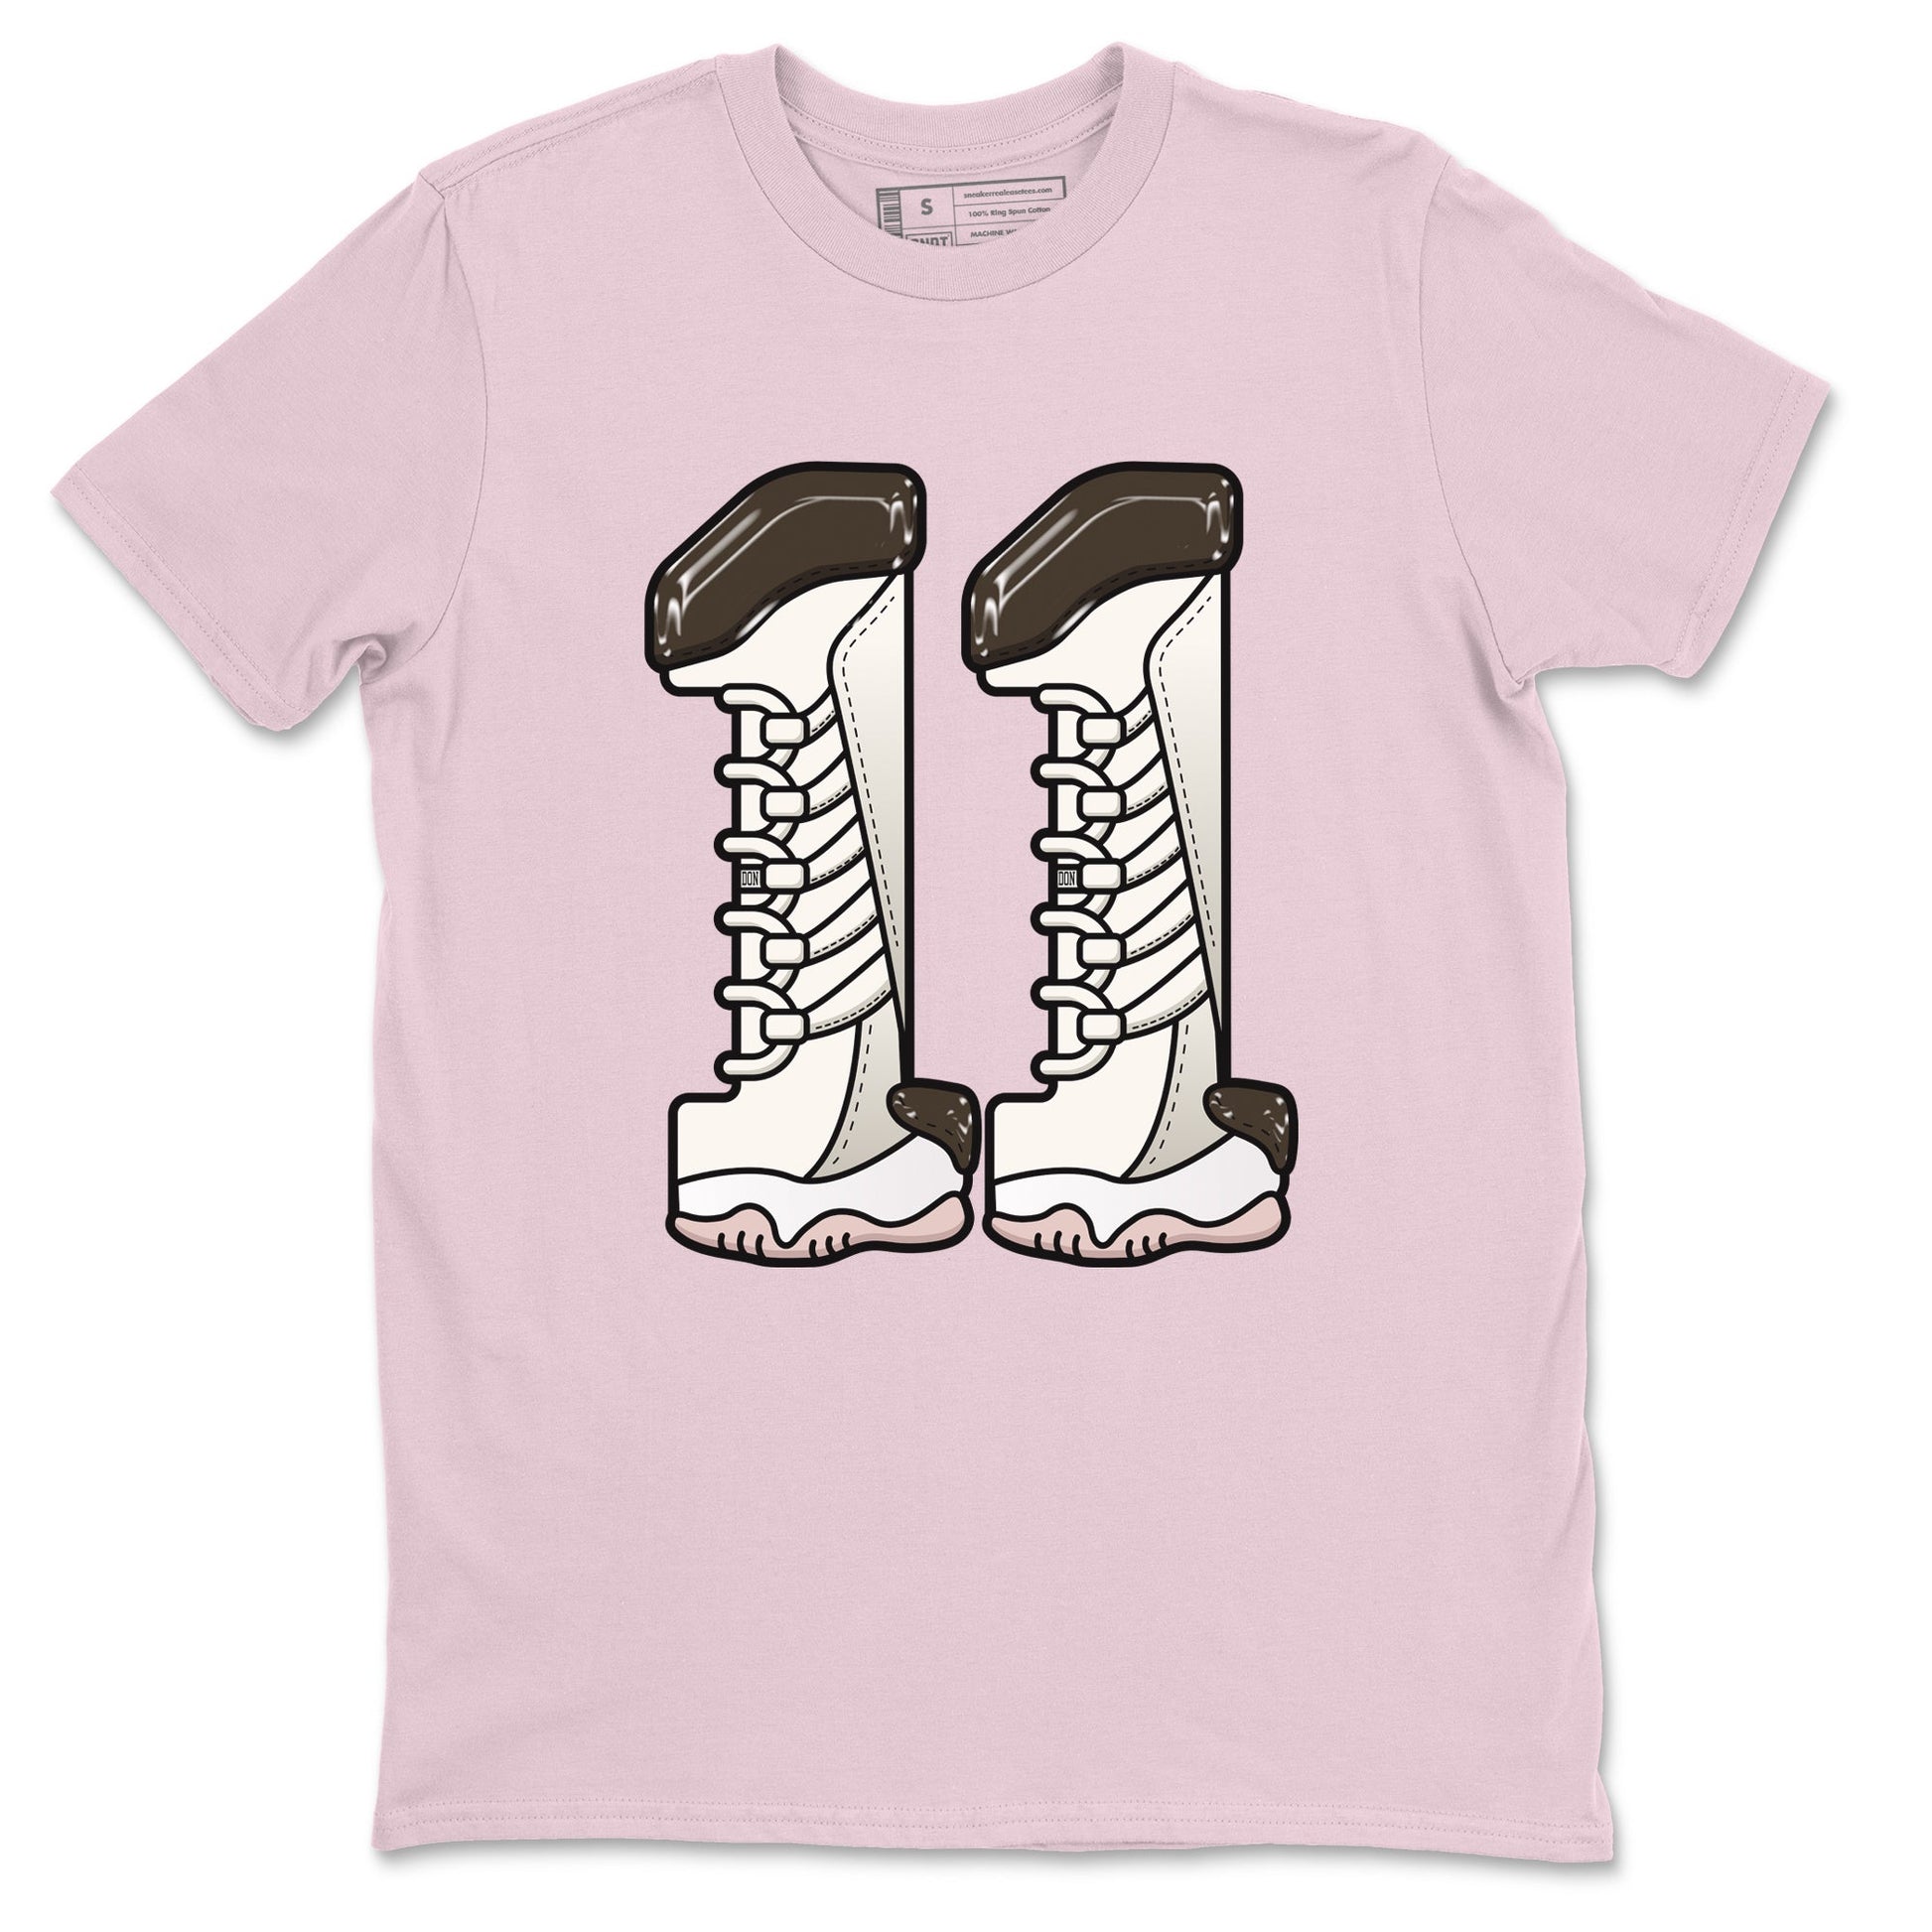 11s Neapolitan shirt to match jordans Number 11 sneaker tees Air Jordan 11 Neapolitan SNRT Sneaker Release Tees Unisex Pink 2 T-Shirt